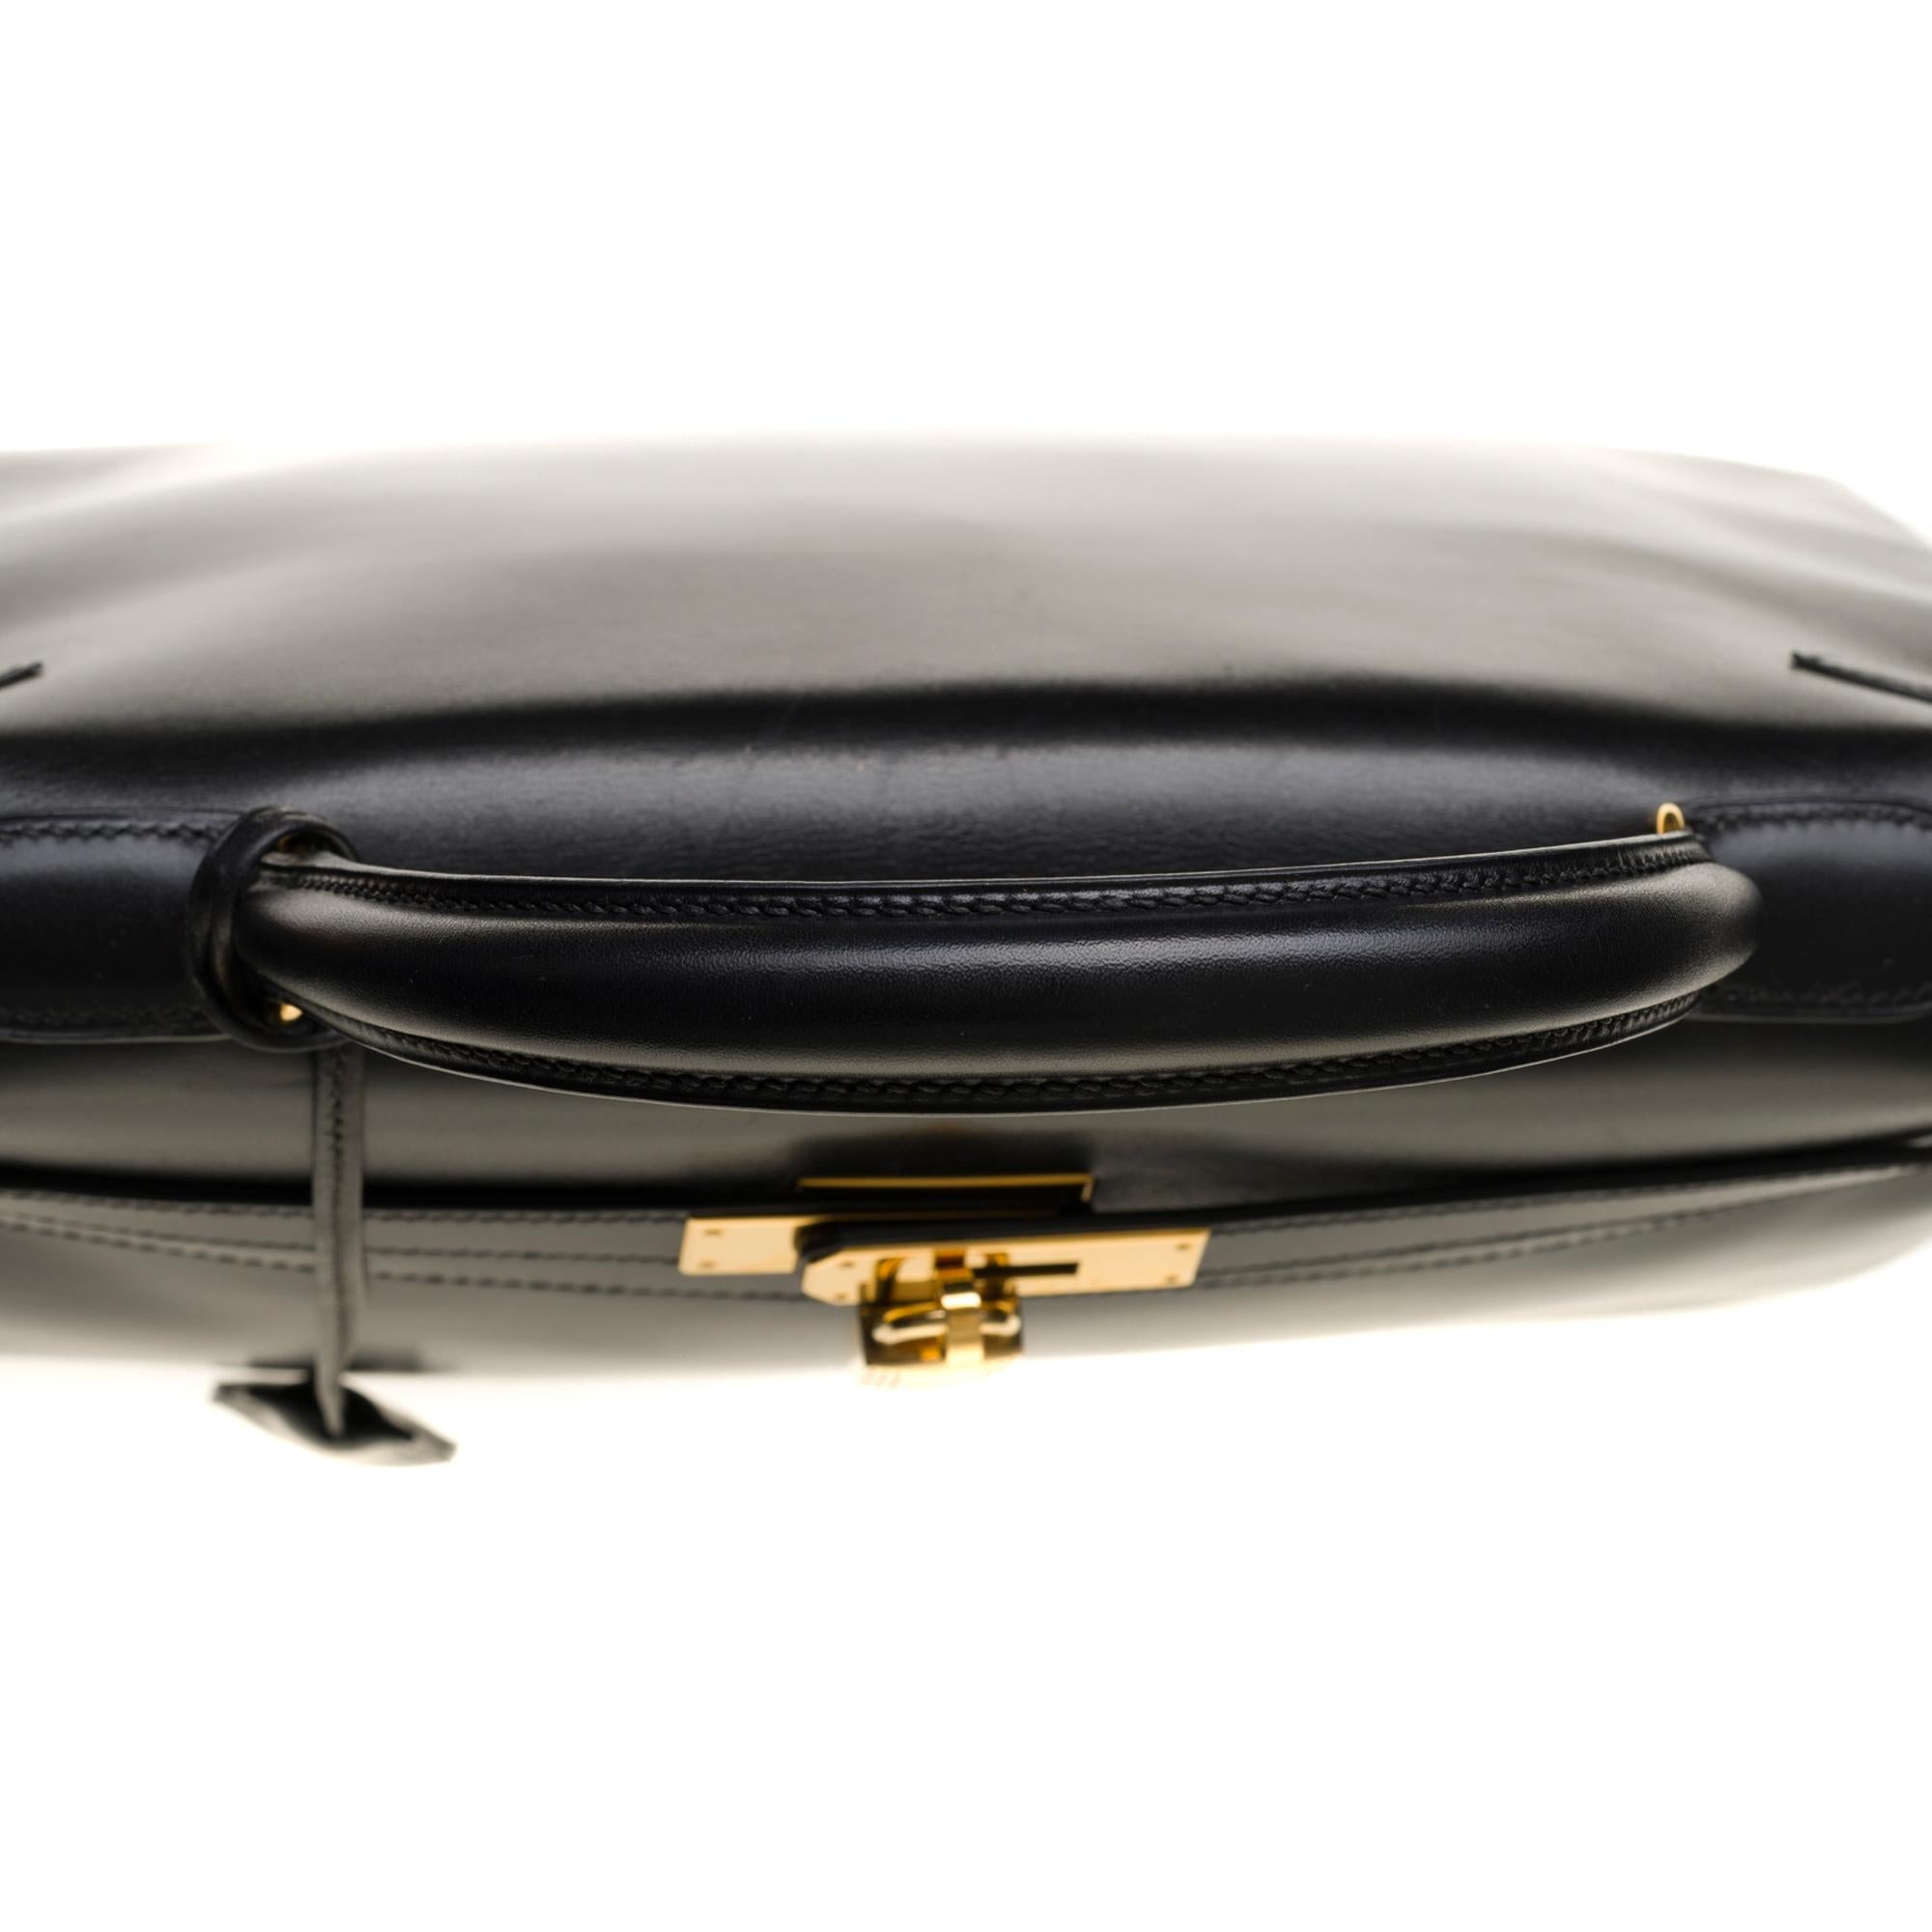 Rare Hermès Kelly 35 retourné handbag with strap in Black Calf leather, GHW 1